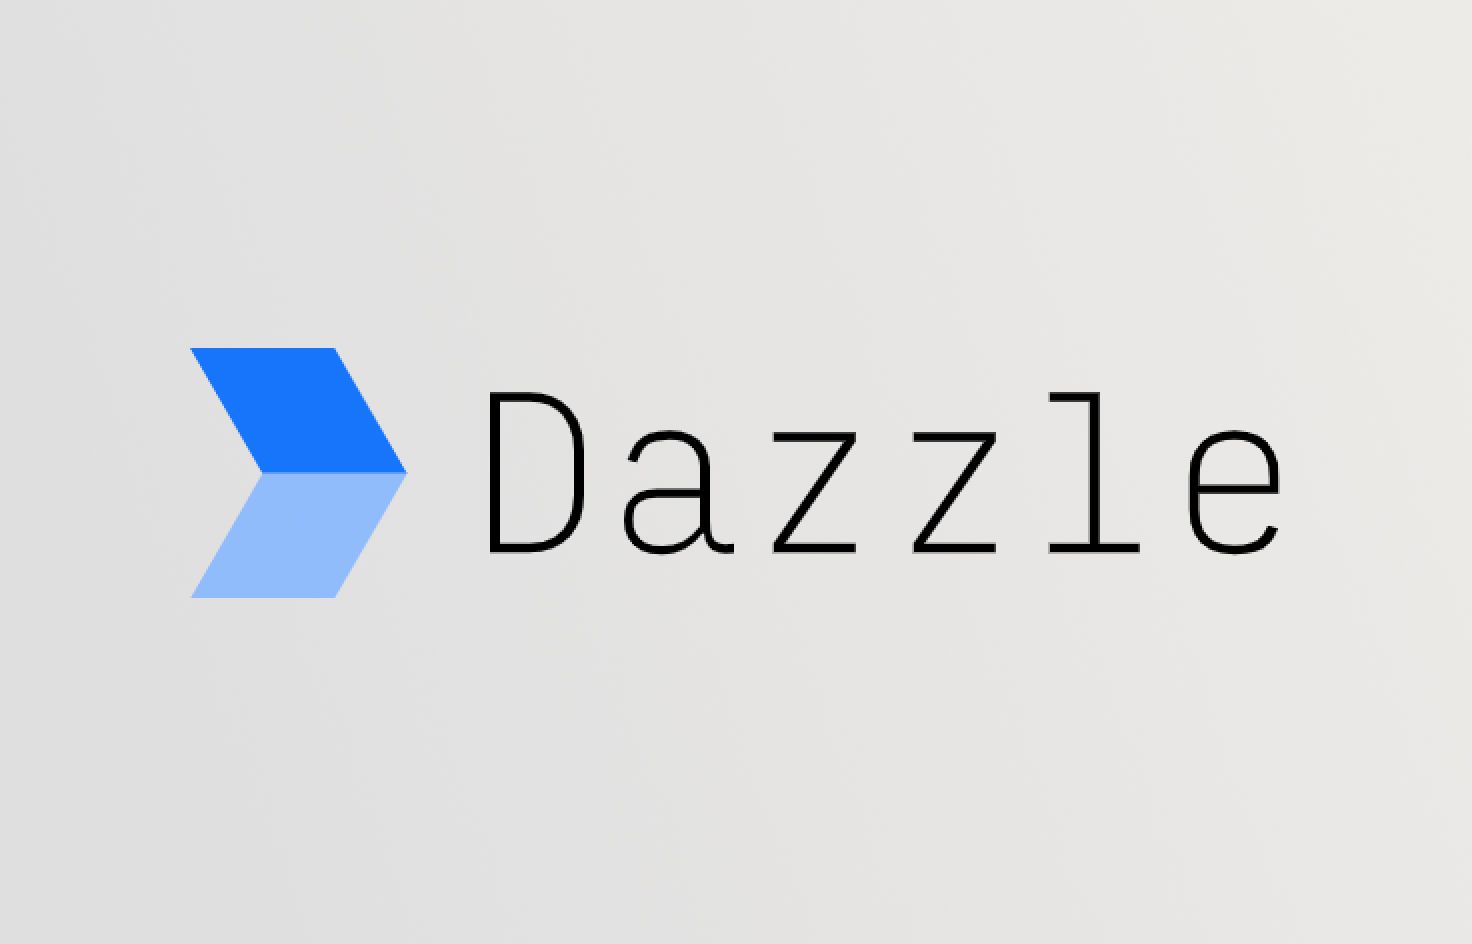 The Dazzle logo